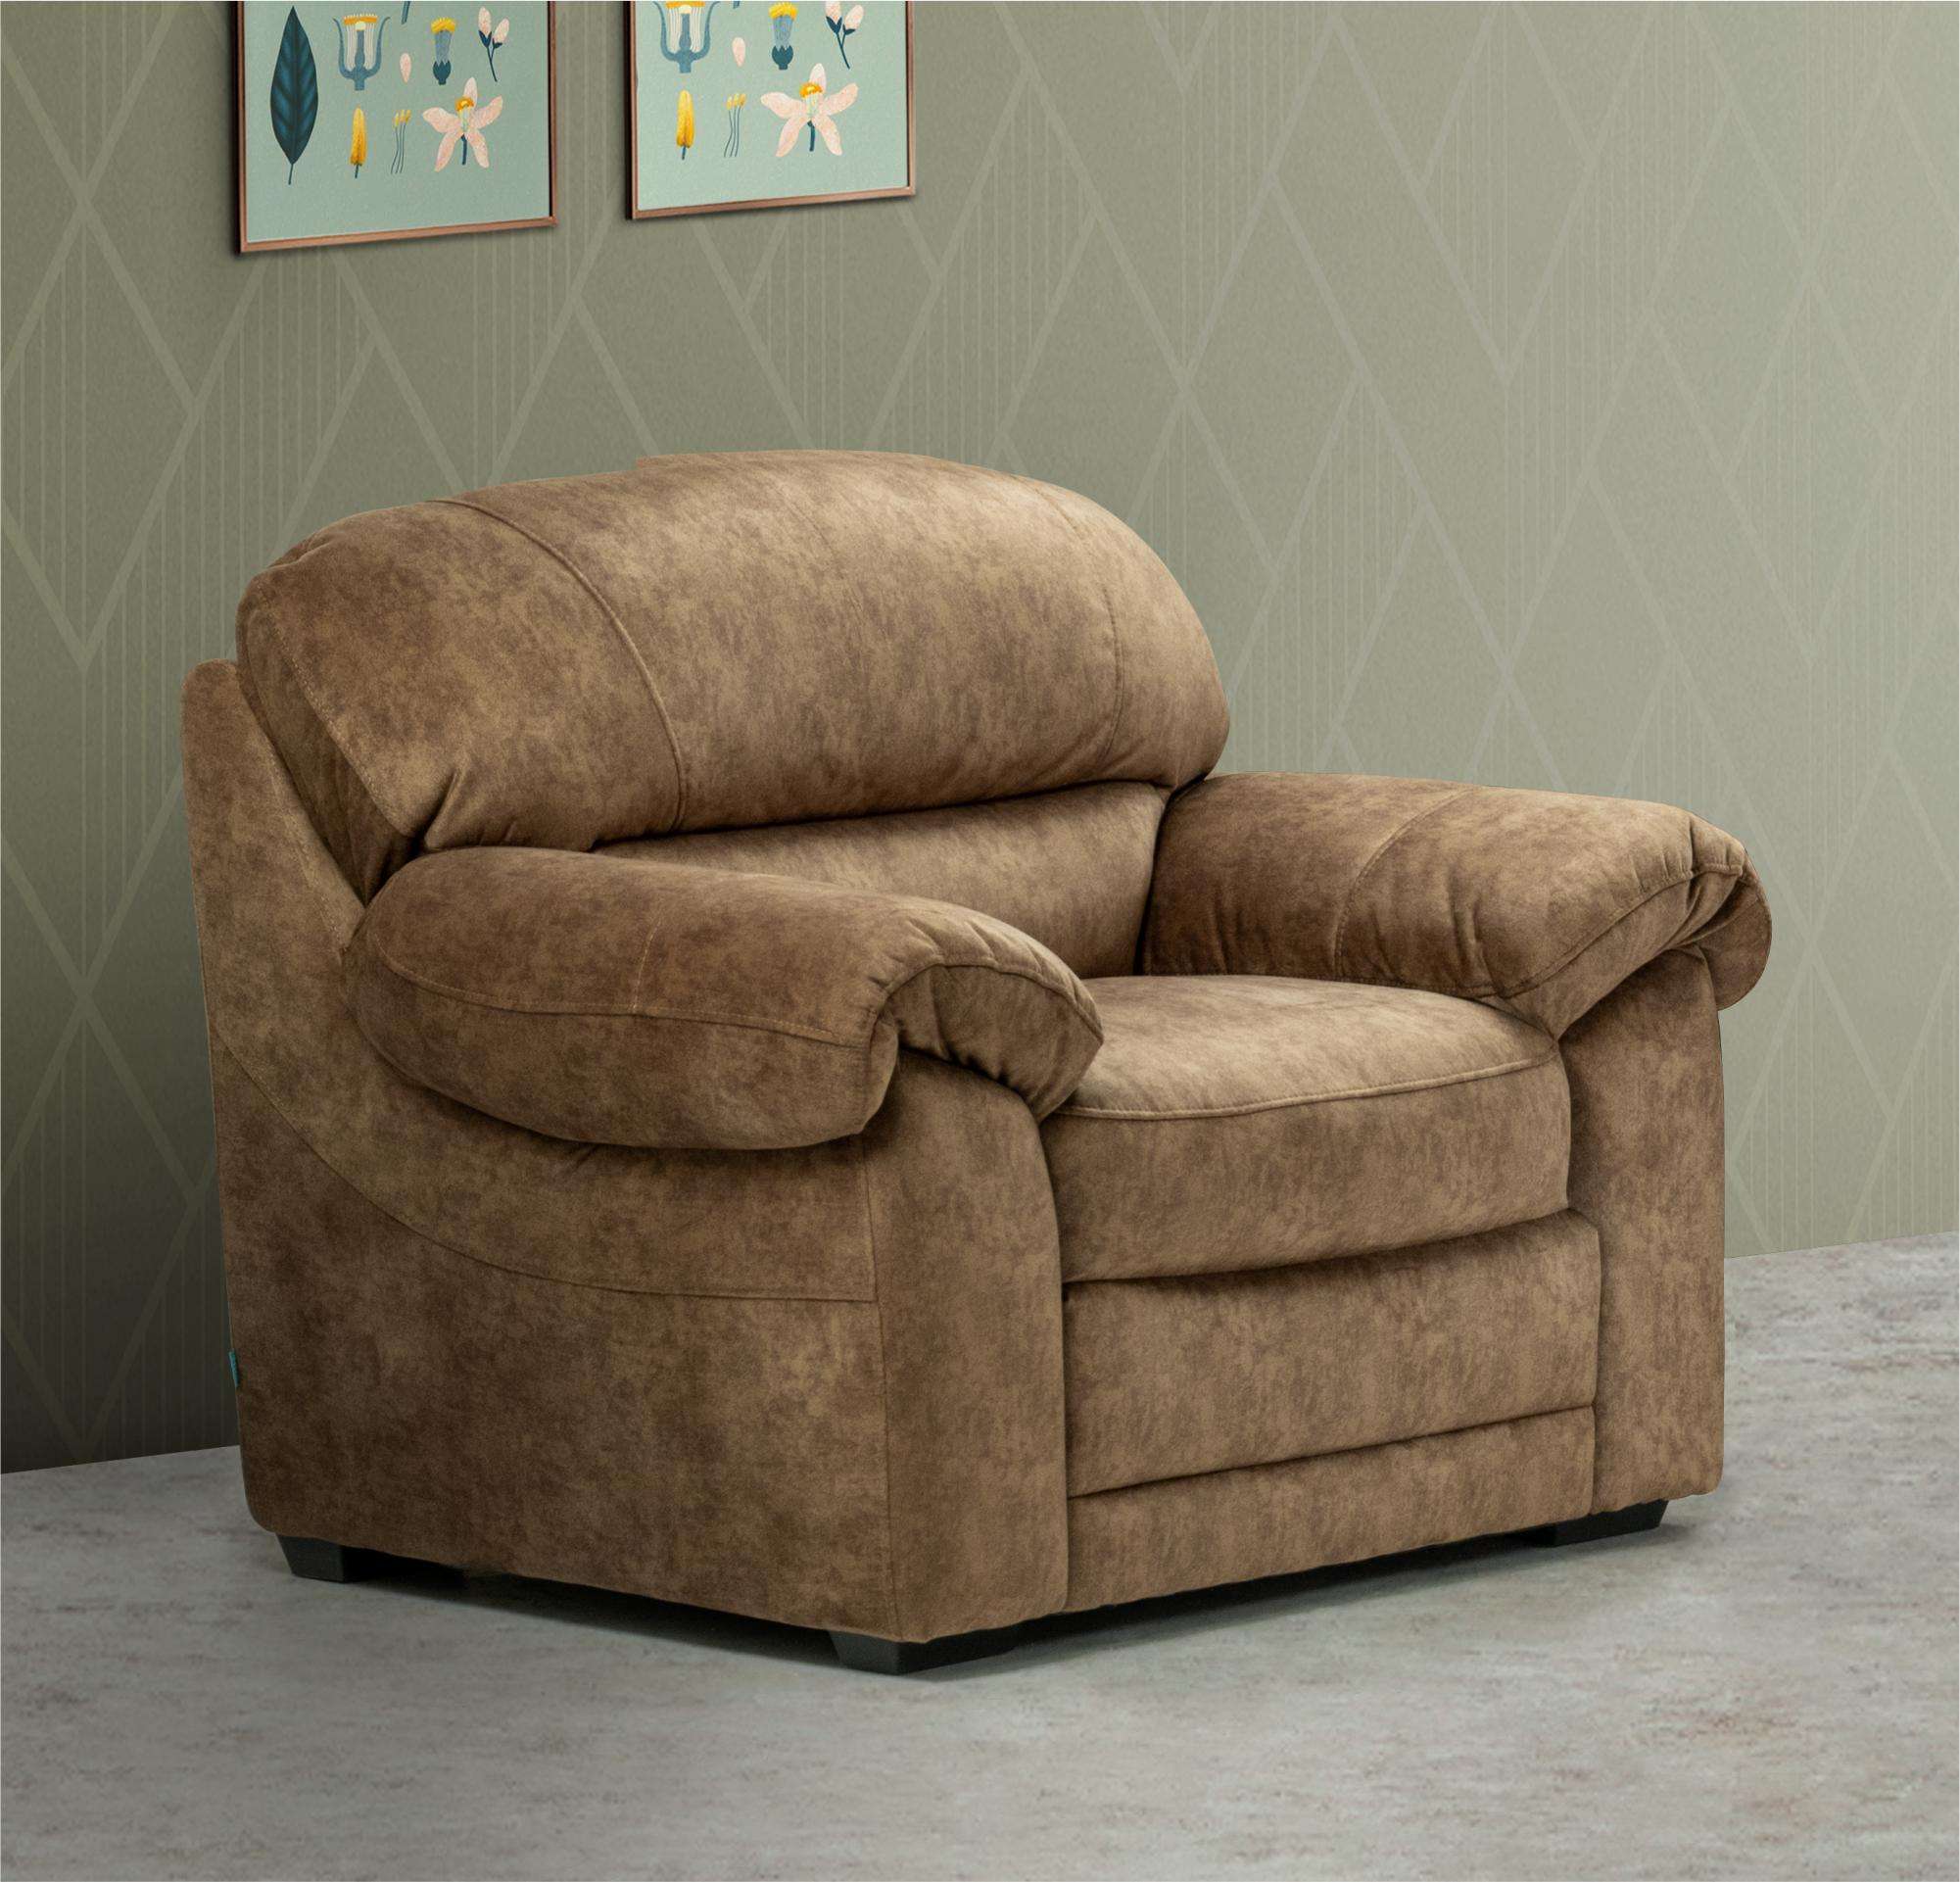 LDRSML001-Manila Sofa 1 Seater-NAE01